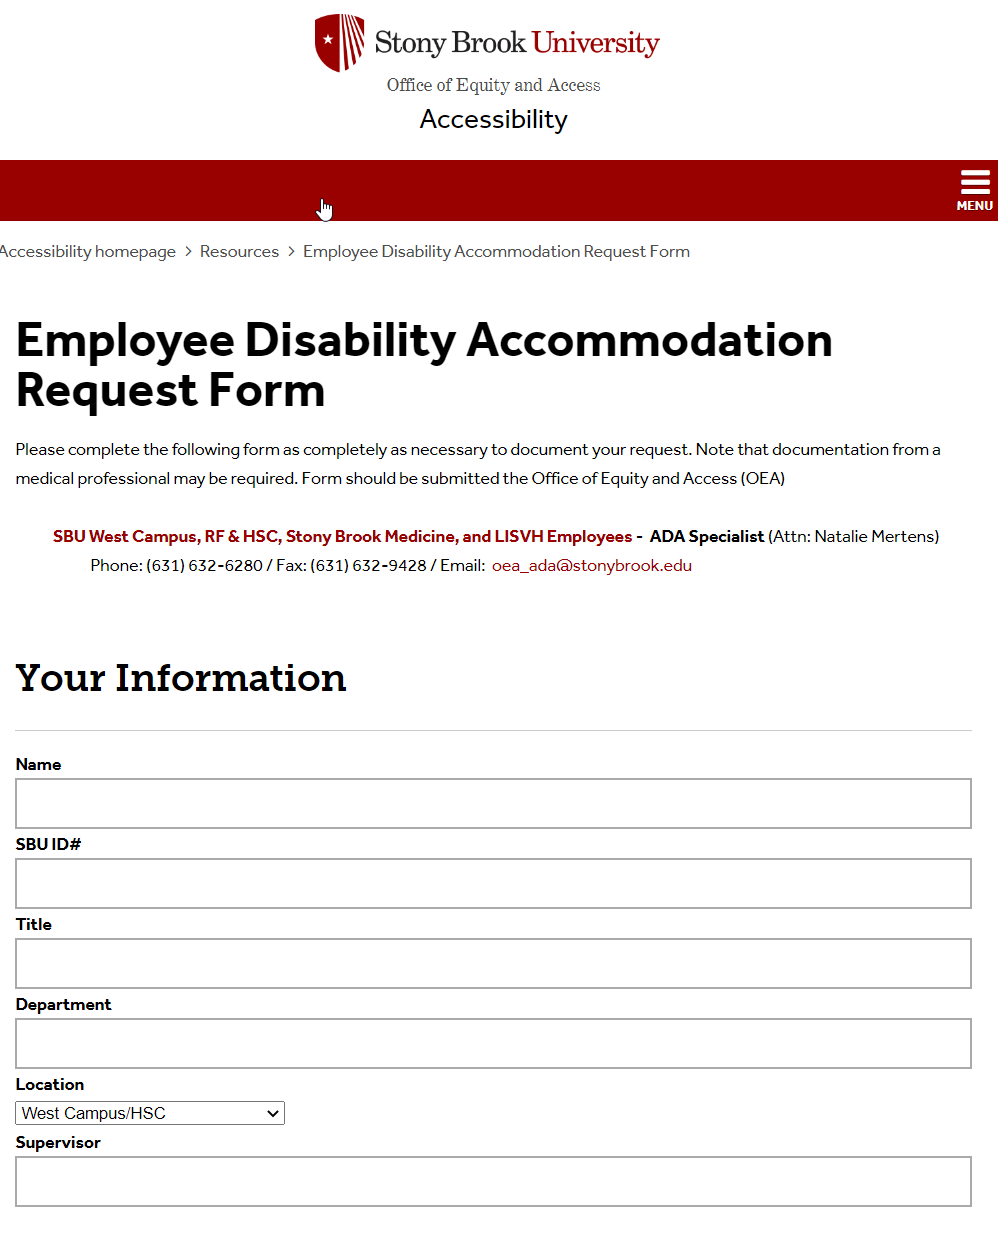 Accessibility Request Form Screenshot